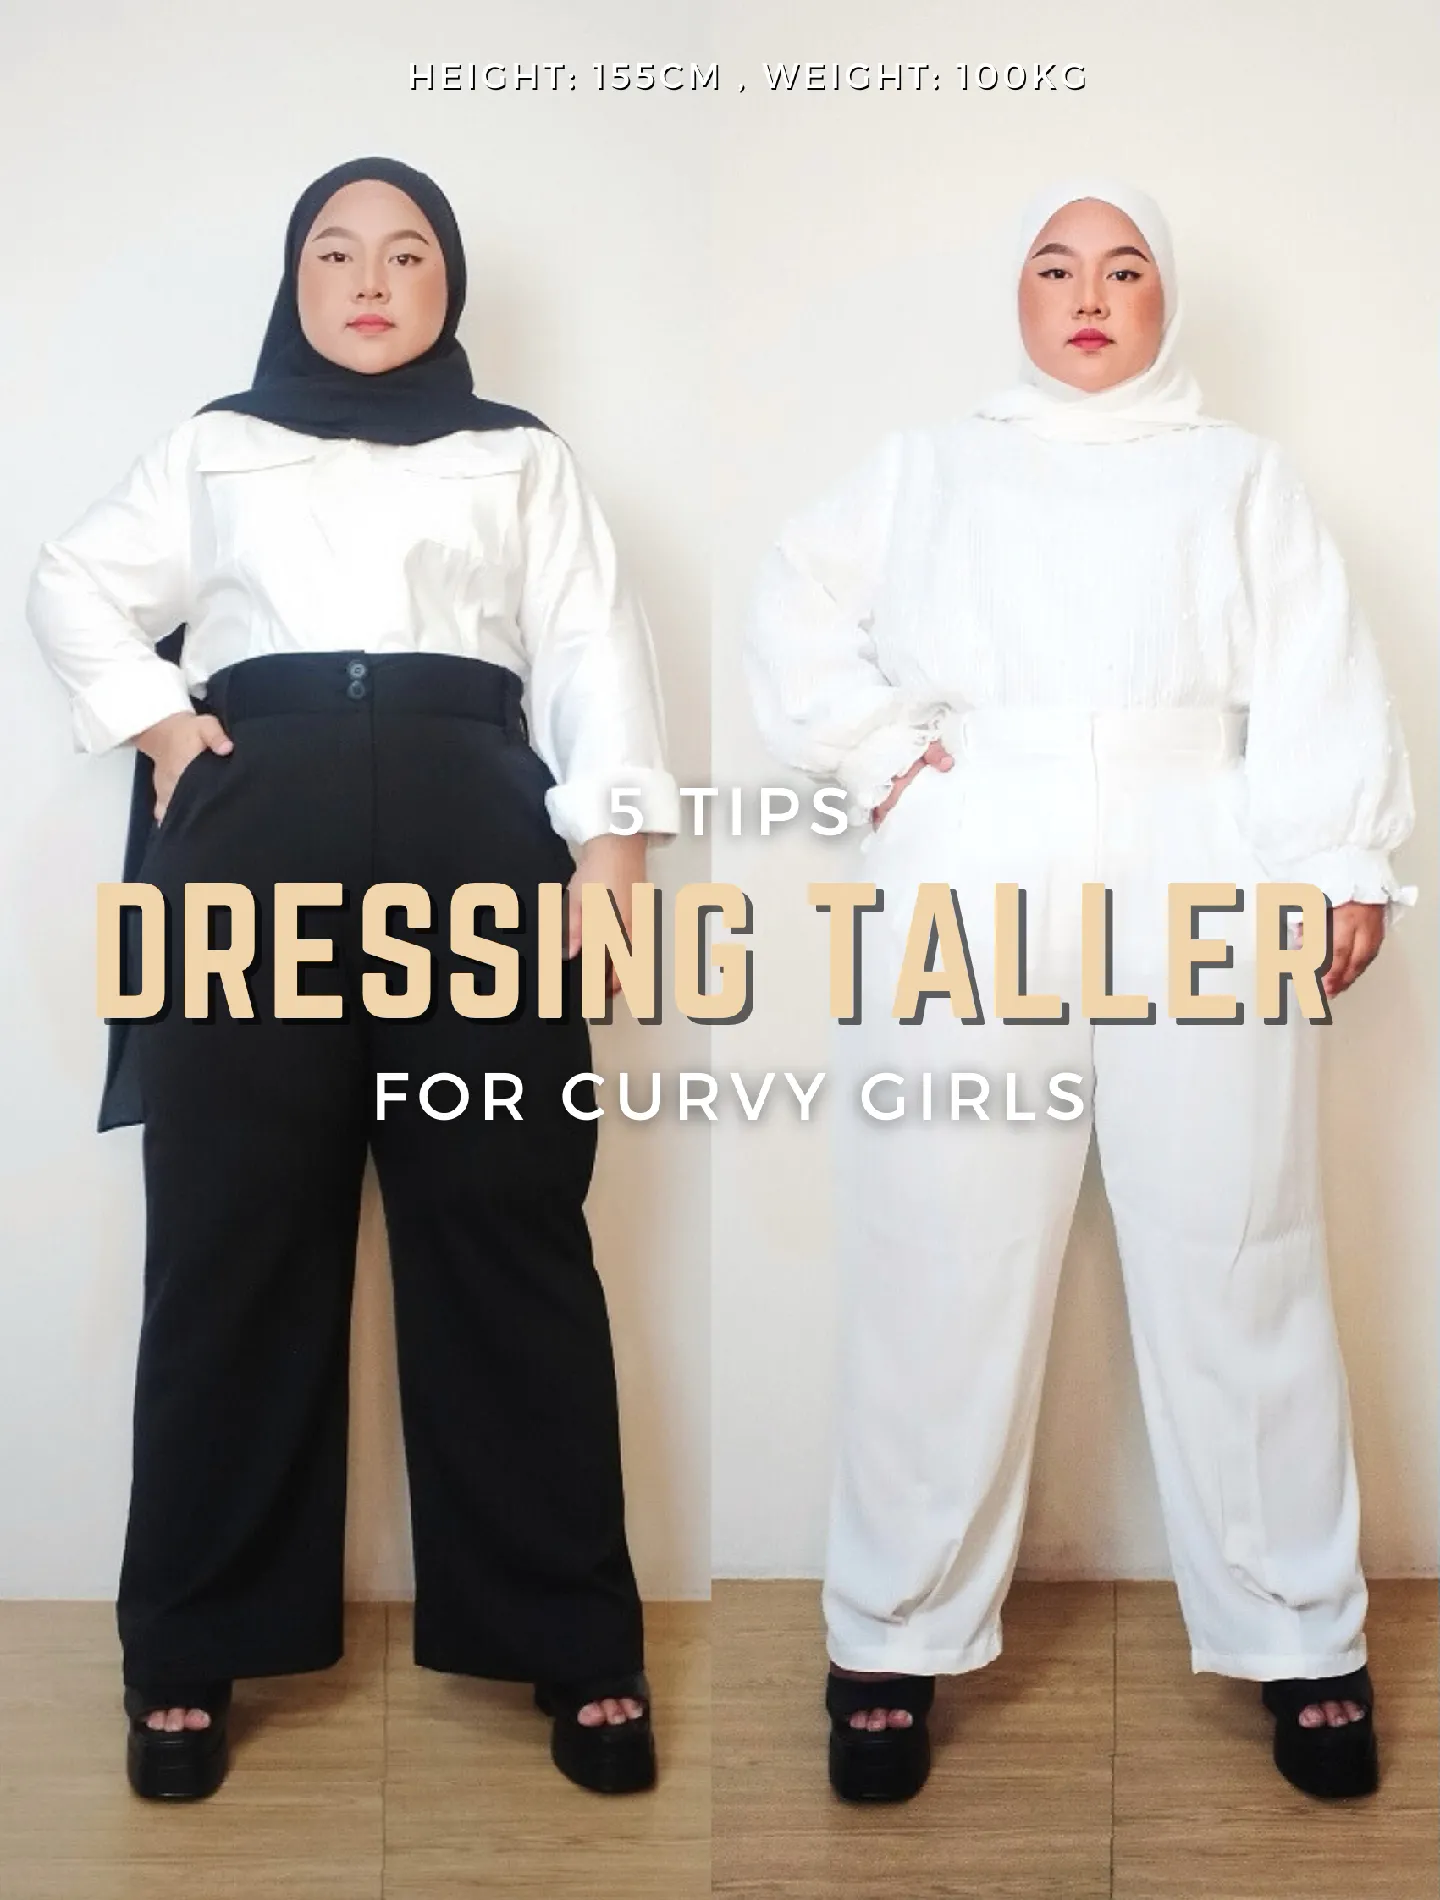 Dressing Taller: 5 Tips For Curvy/Chubby Girls